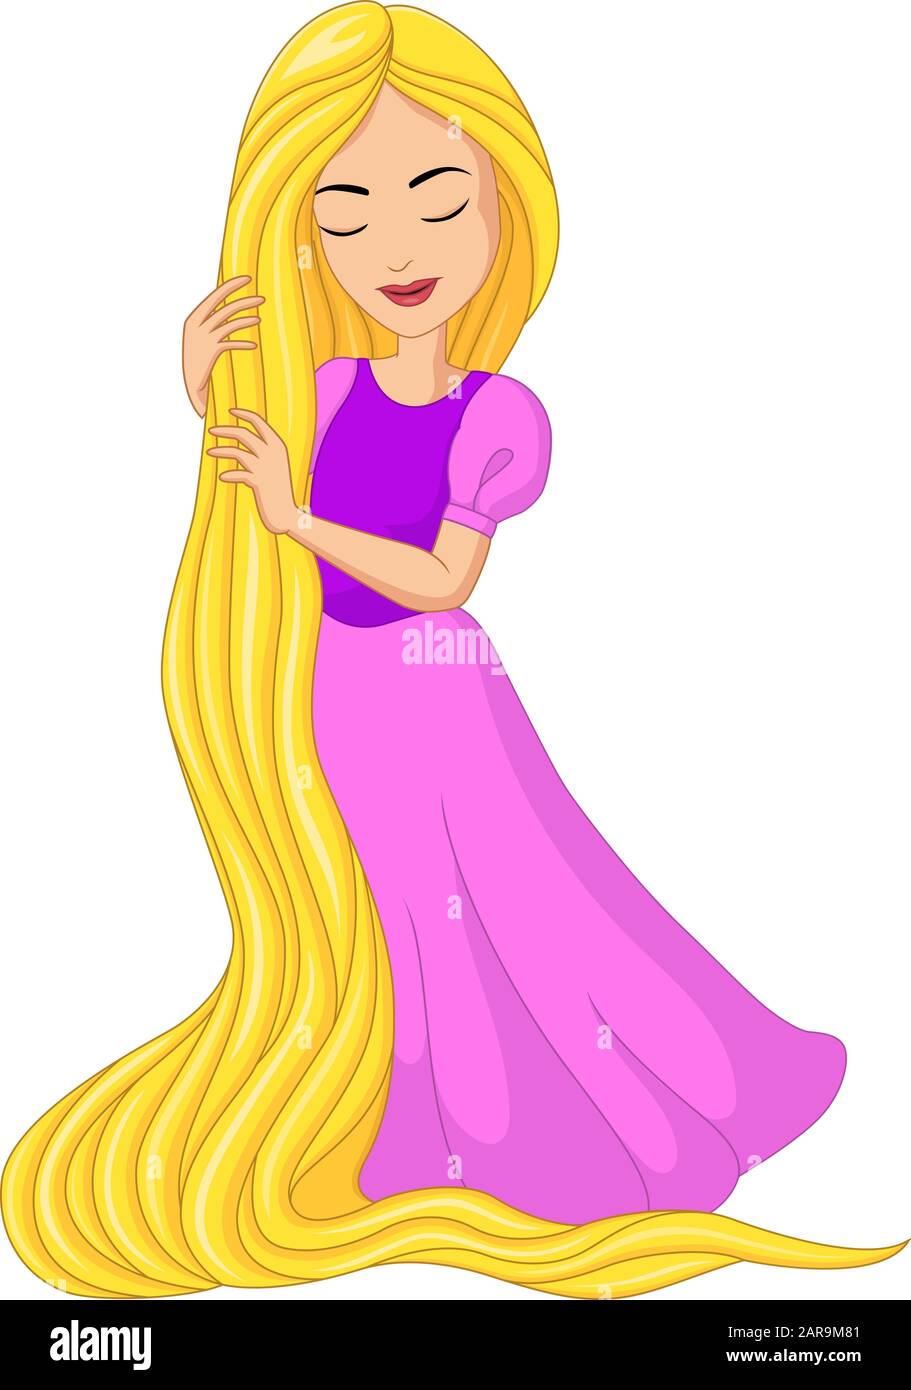 Cartoon principessa rapunzel con capelli lunghi Immagine e Vettoriale -  Alamy